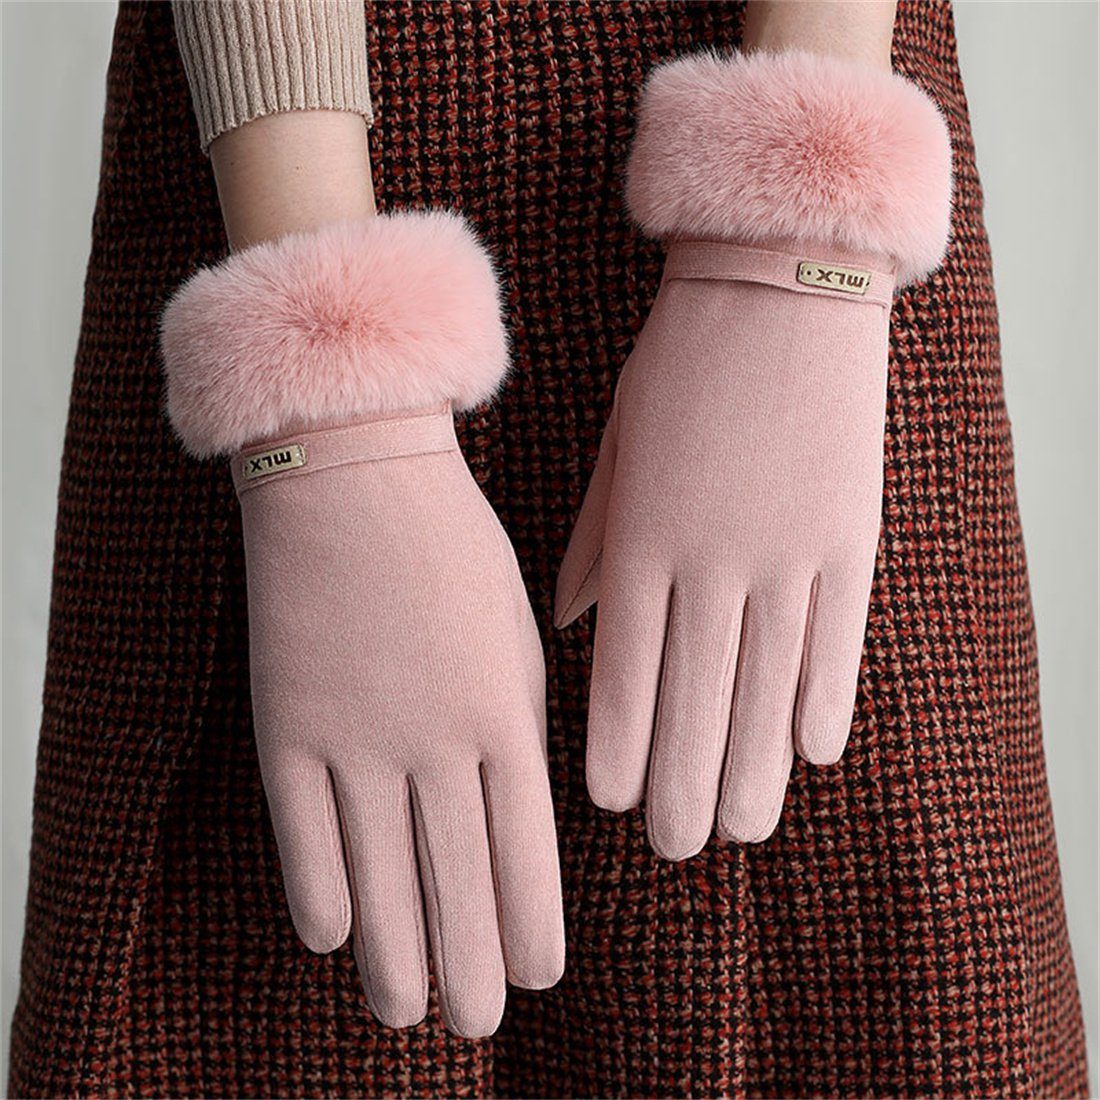 DÖRÖY Fleecehandschuhe Outdoor-Radhandschuhe für Frauen, gepolsterte warme Winterhandschuhe Rosa